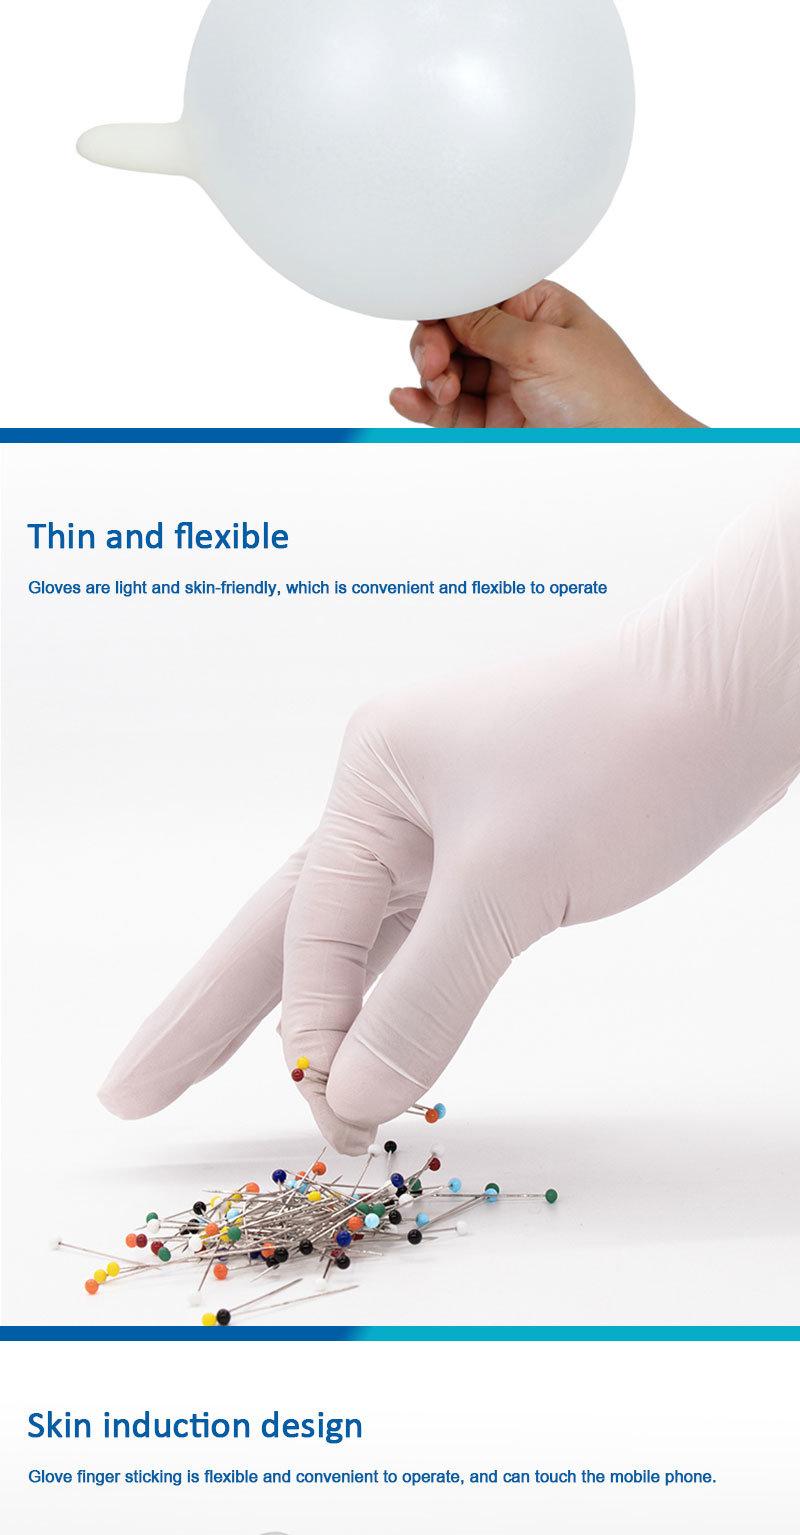 Powder/Powder Free Smooth or Textured Surfaces Latex Examination Gloves Disposable